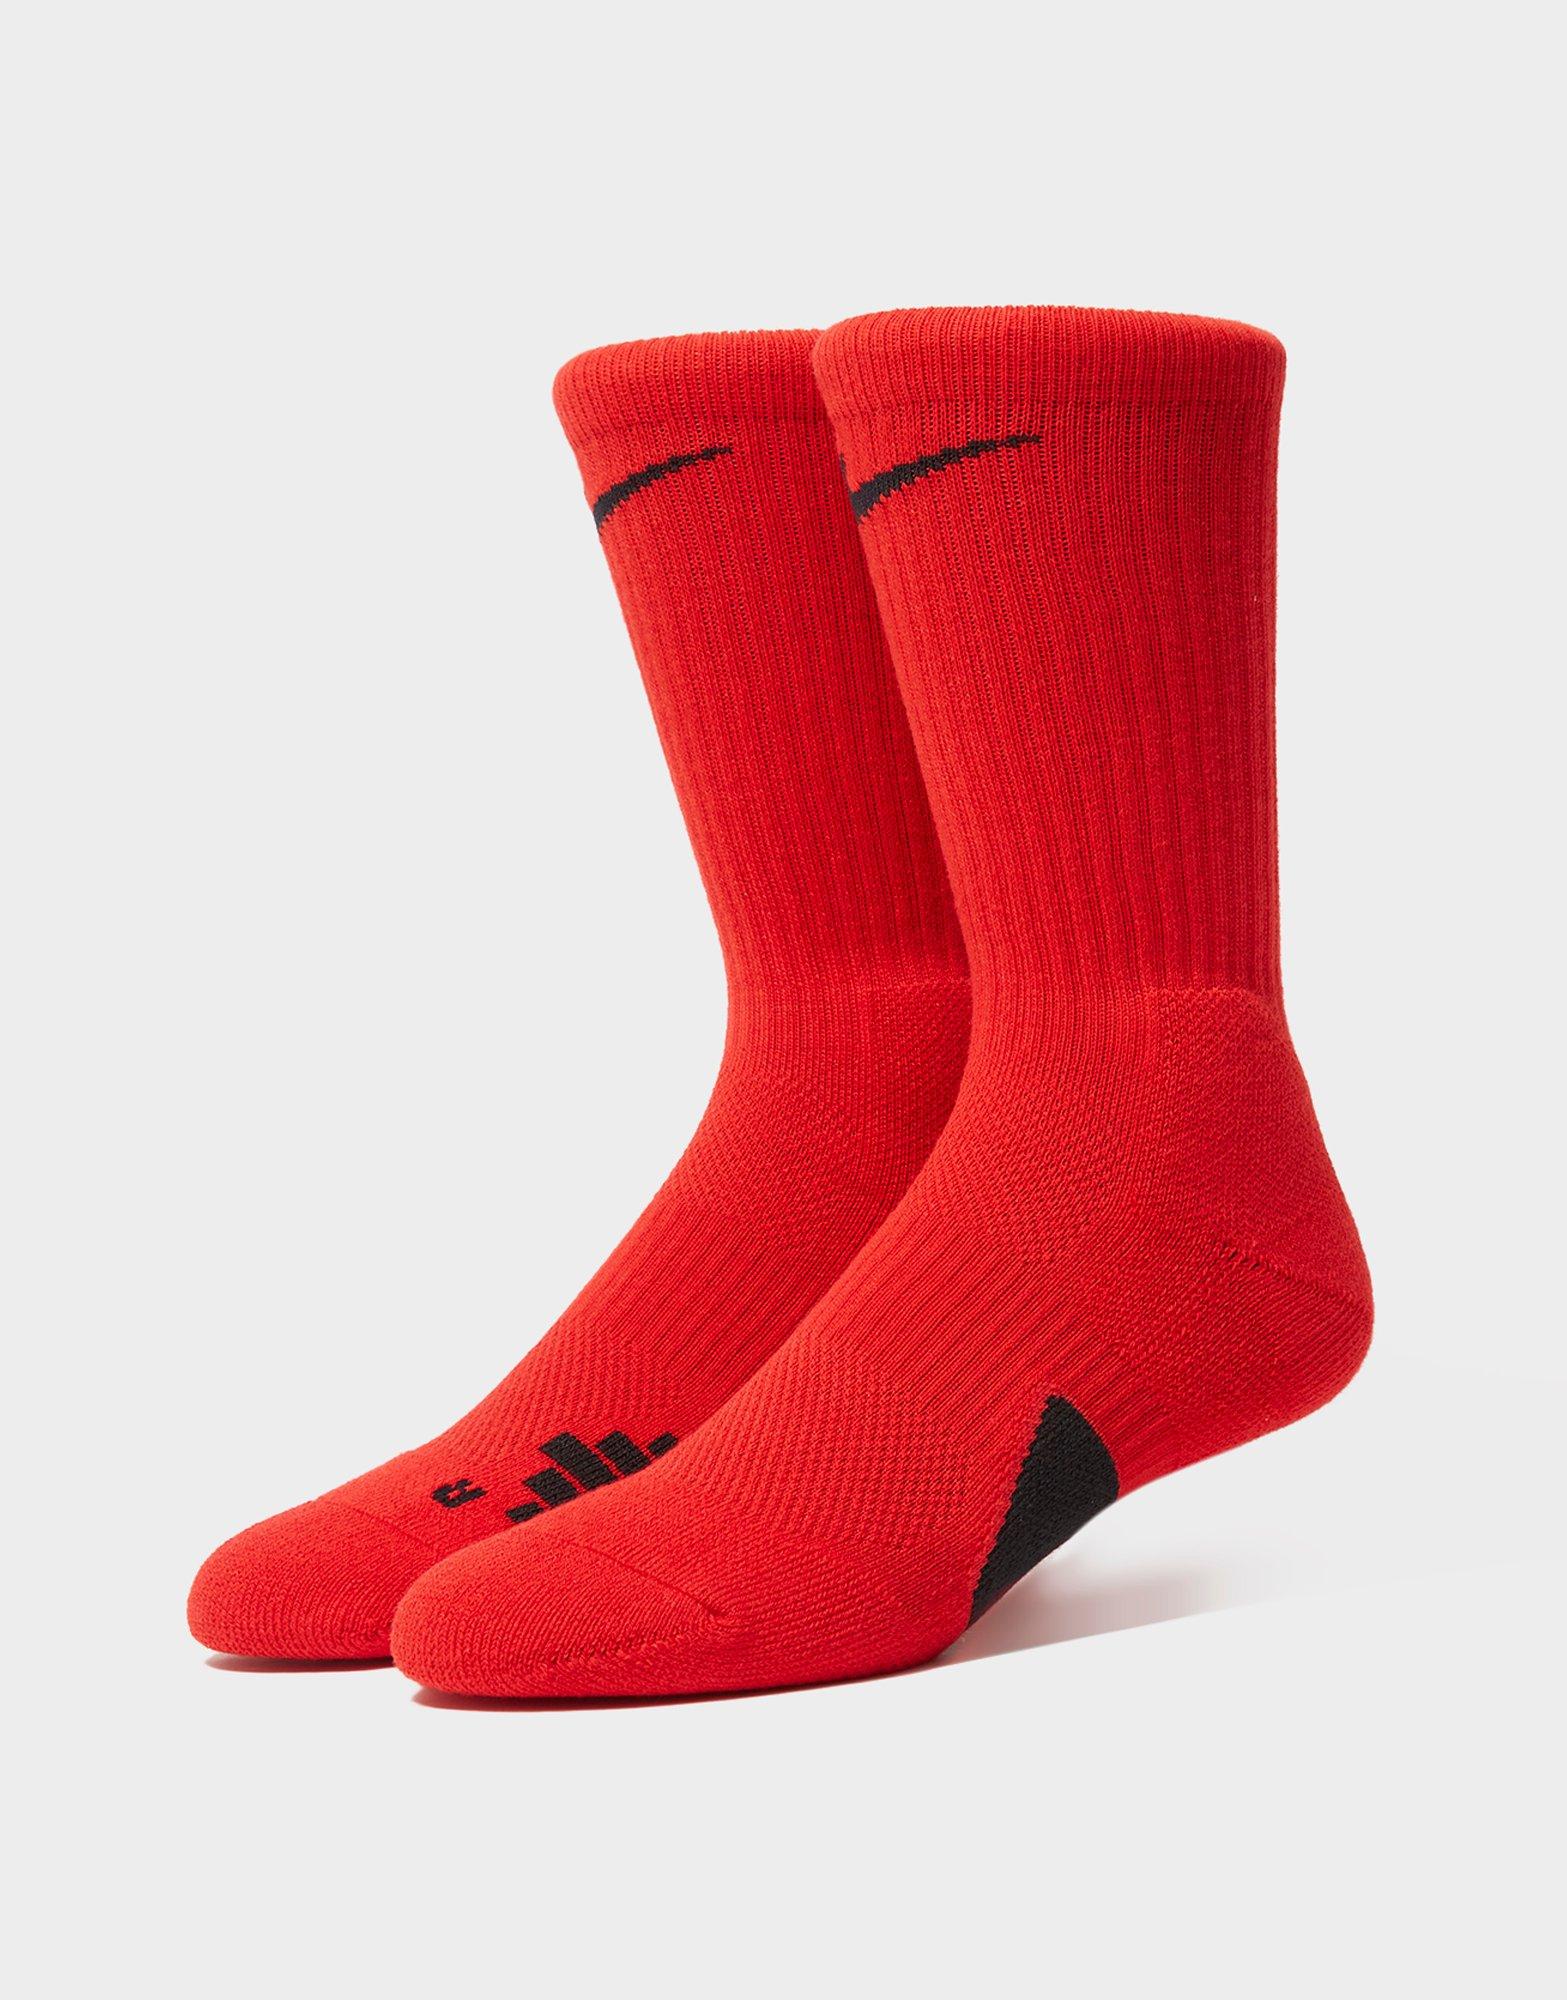 Are Nike Elite Socks still popular?